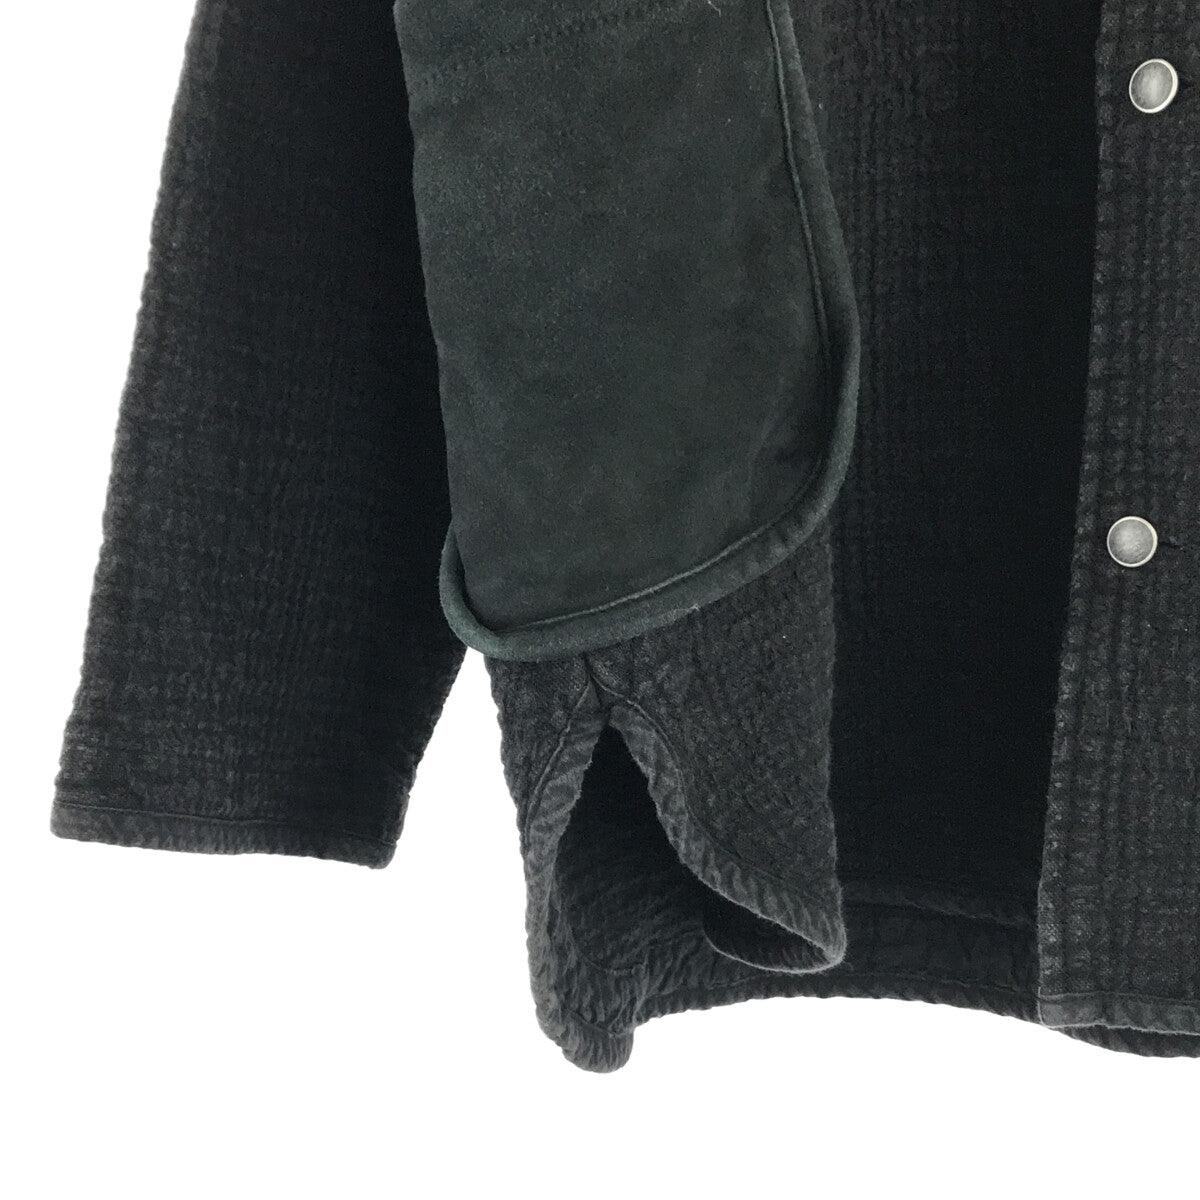 porter classic sashiko shirt jacket 1 黒